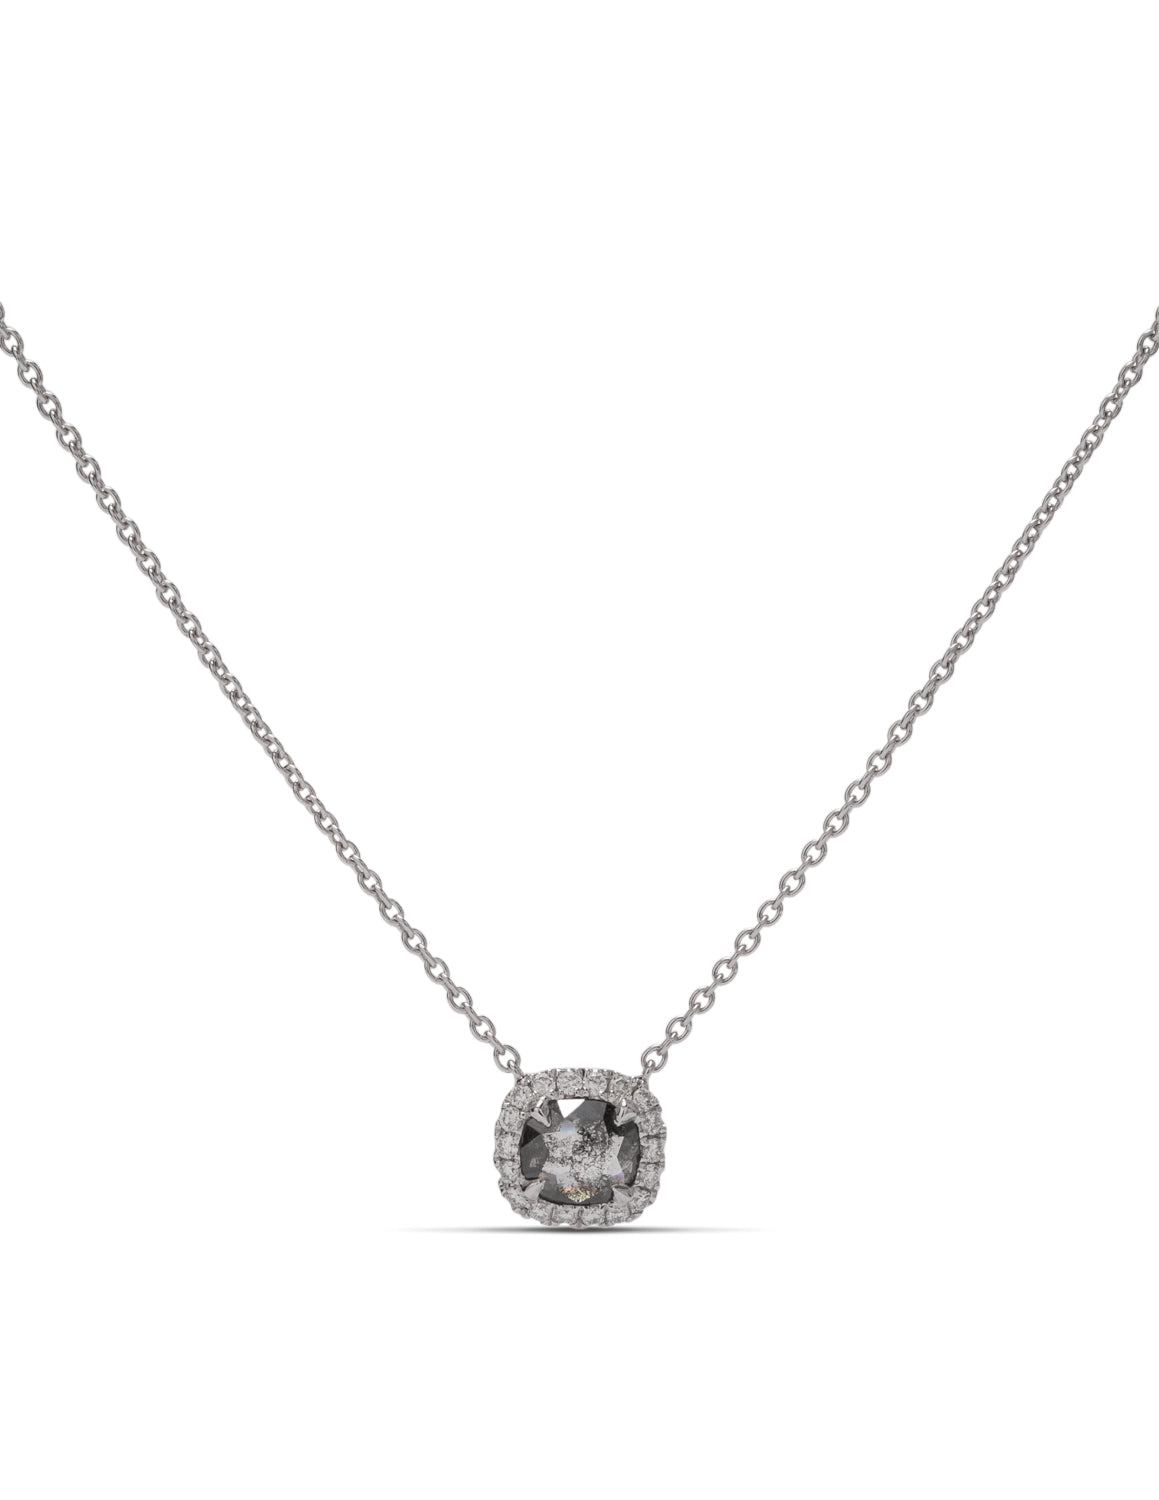 Rough Grey Cushion Shaped Diamond Necklace - Charles Koll Jewellers